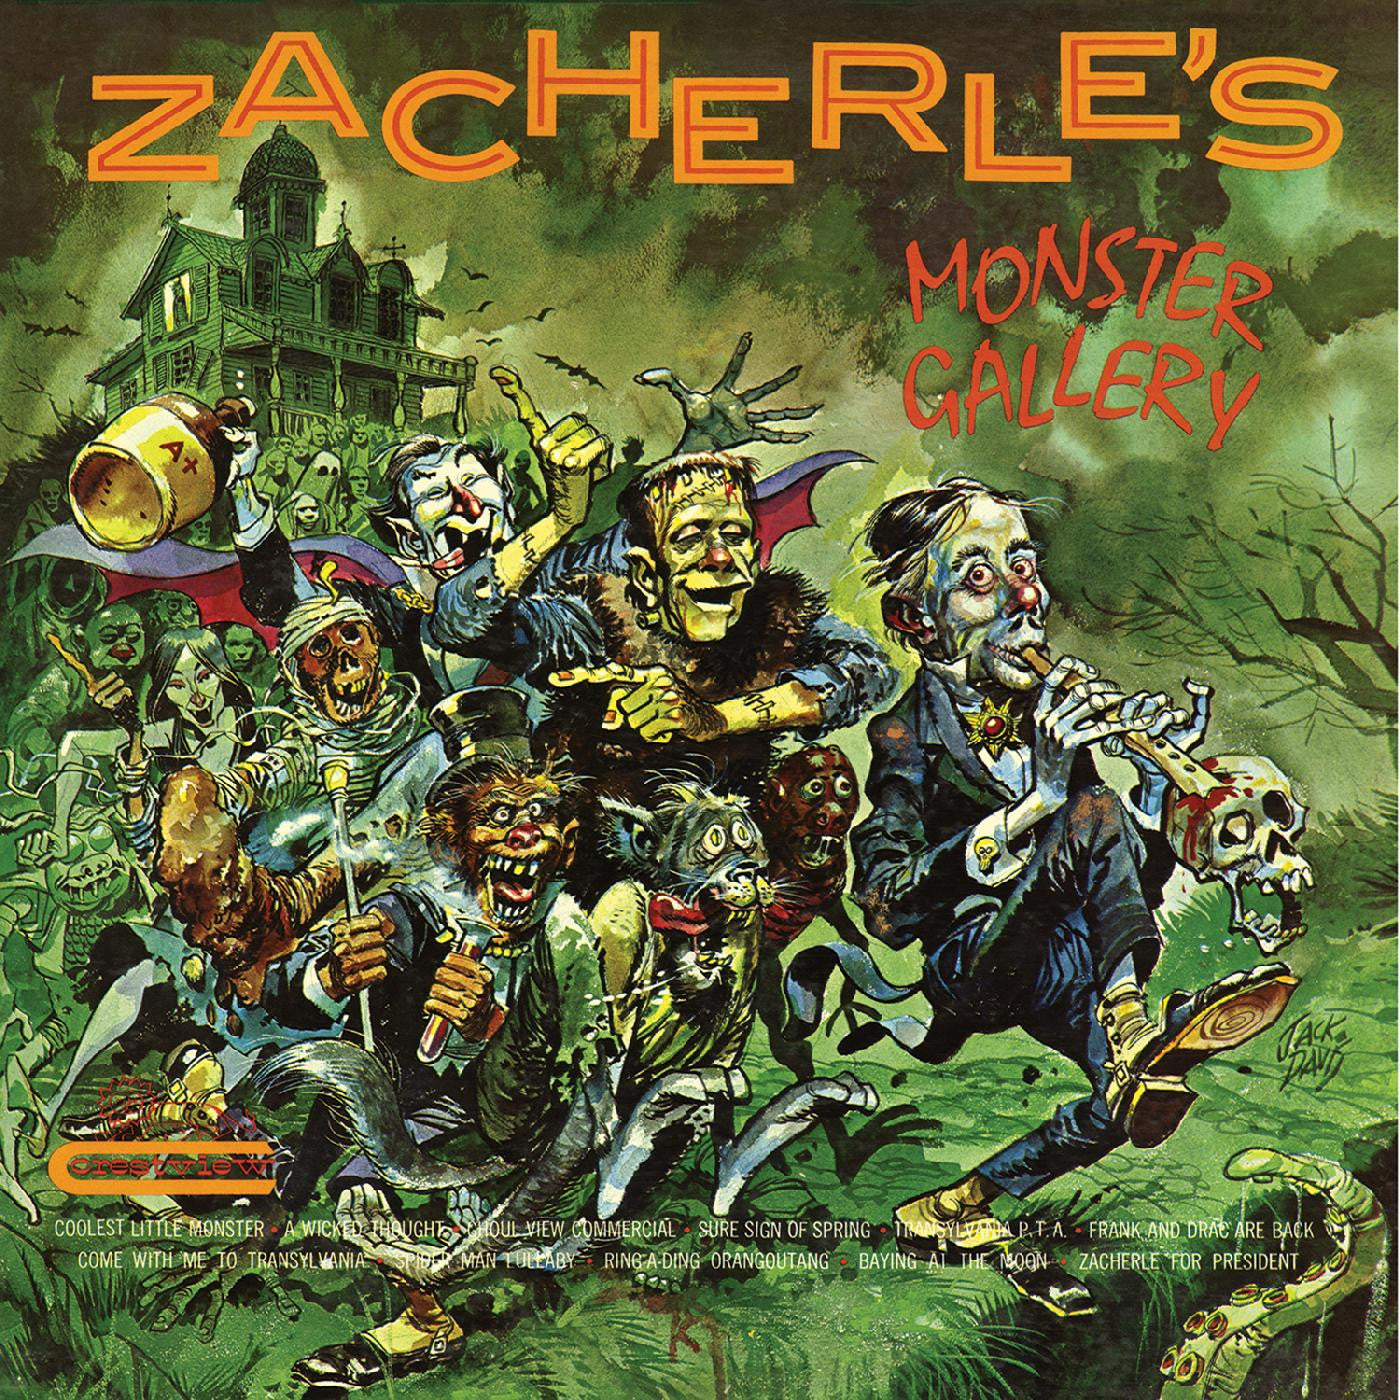 Zacherle - Zacherle's Monster Gallery [Green Vinyl]